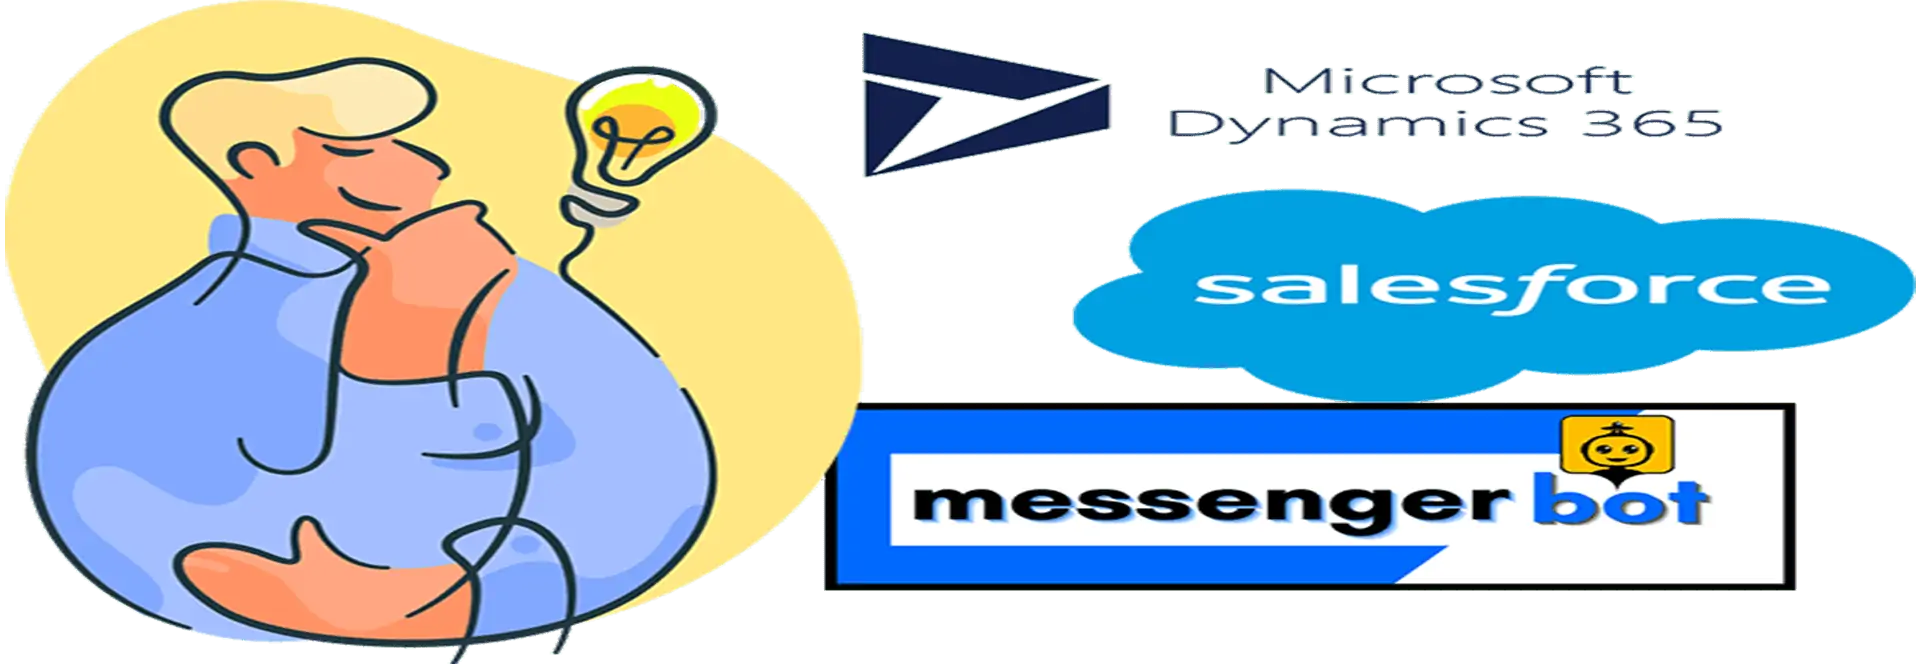 microsoft dynamics vs salesforce microsoft salesforce salesforce or microsoft dynamics microsoft dynamics crm vs salesforce